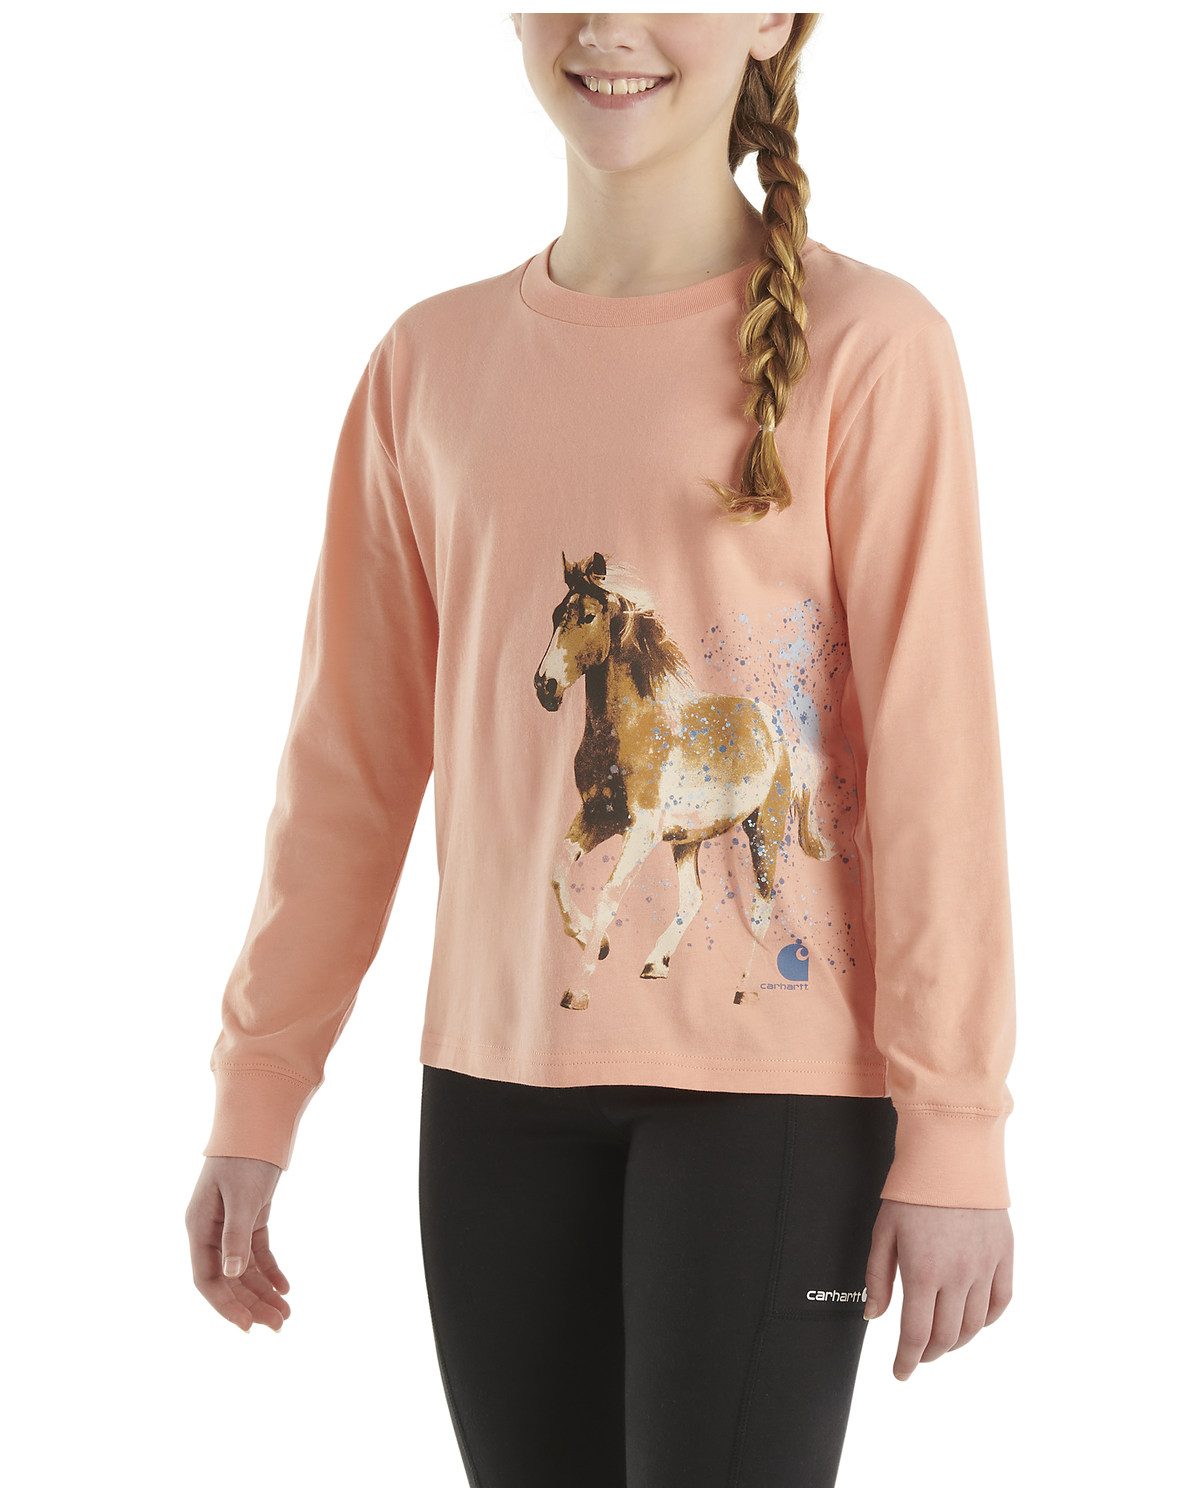 Carhartt Toddler Girls' Running Horse Long Sleeve Graphic Tee